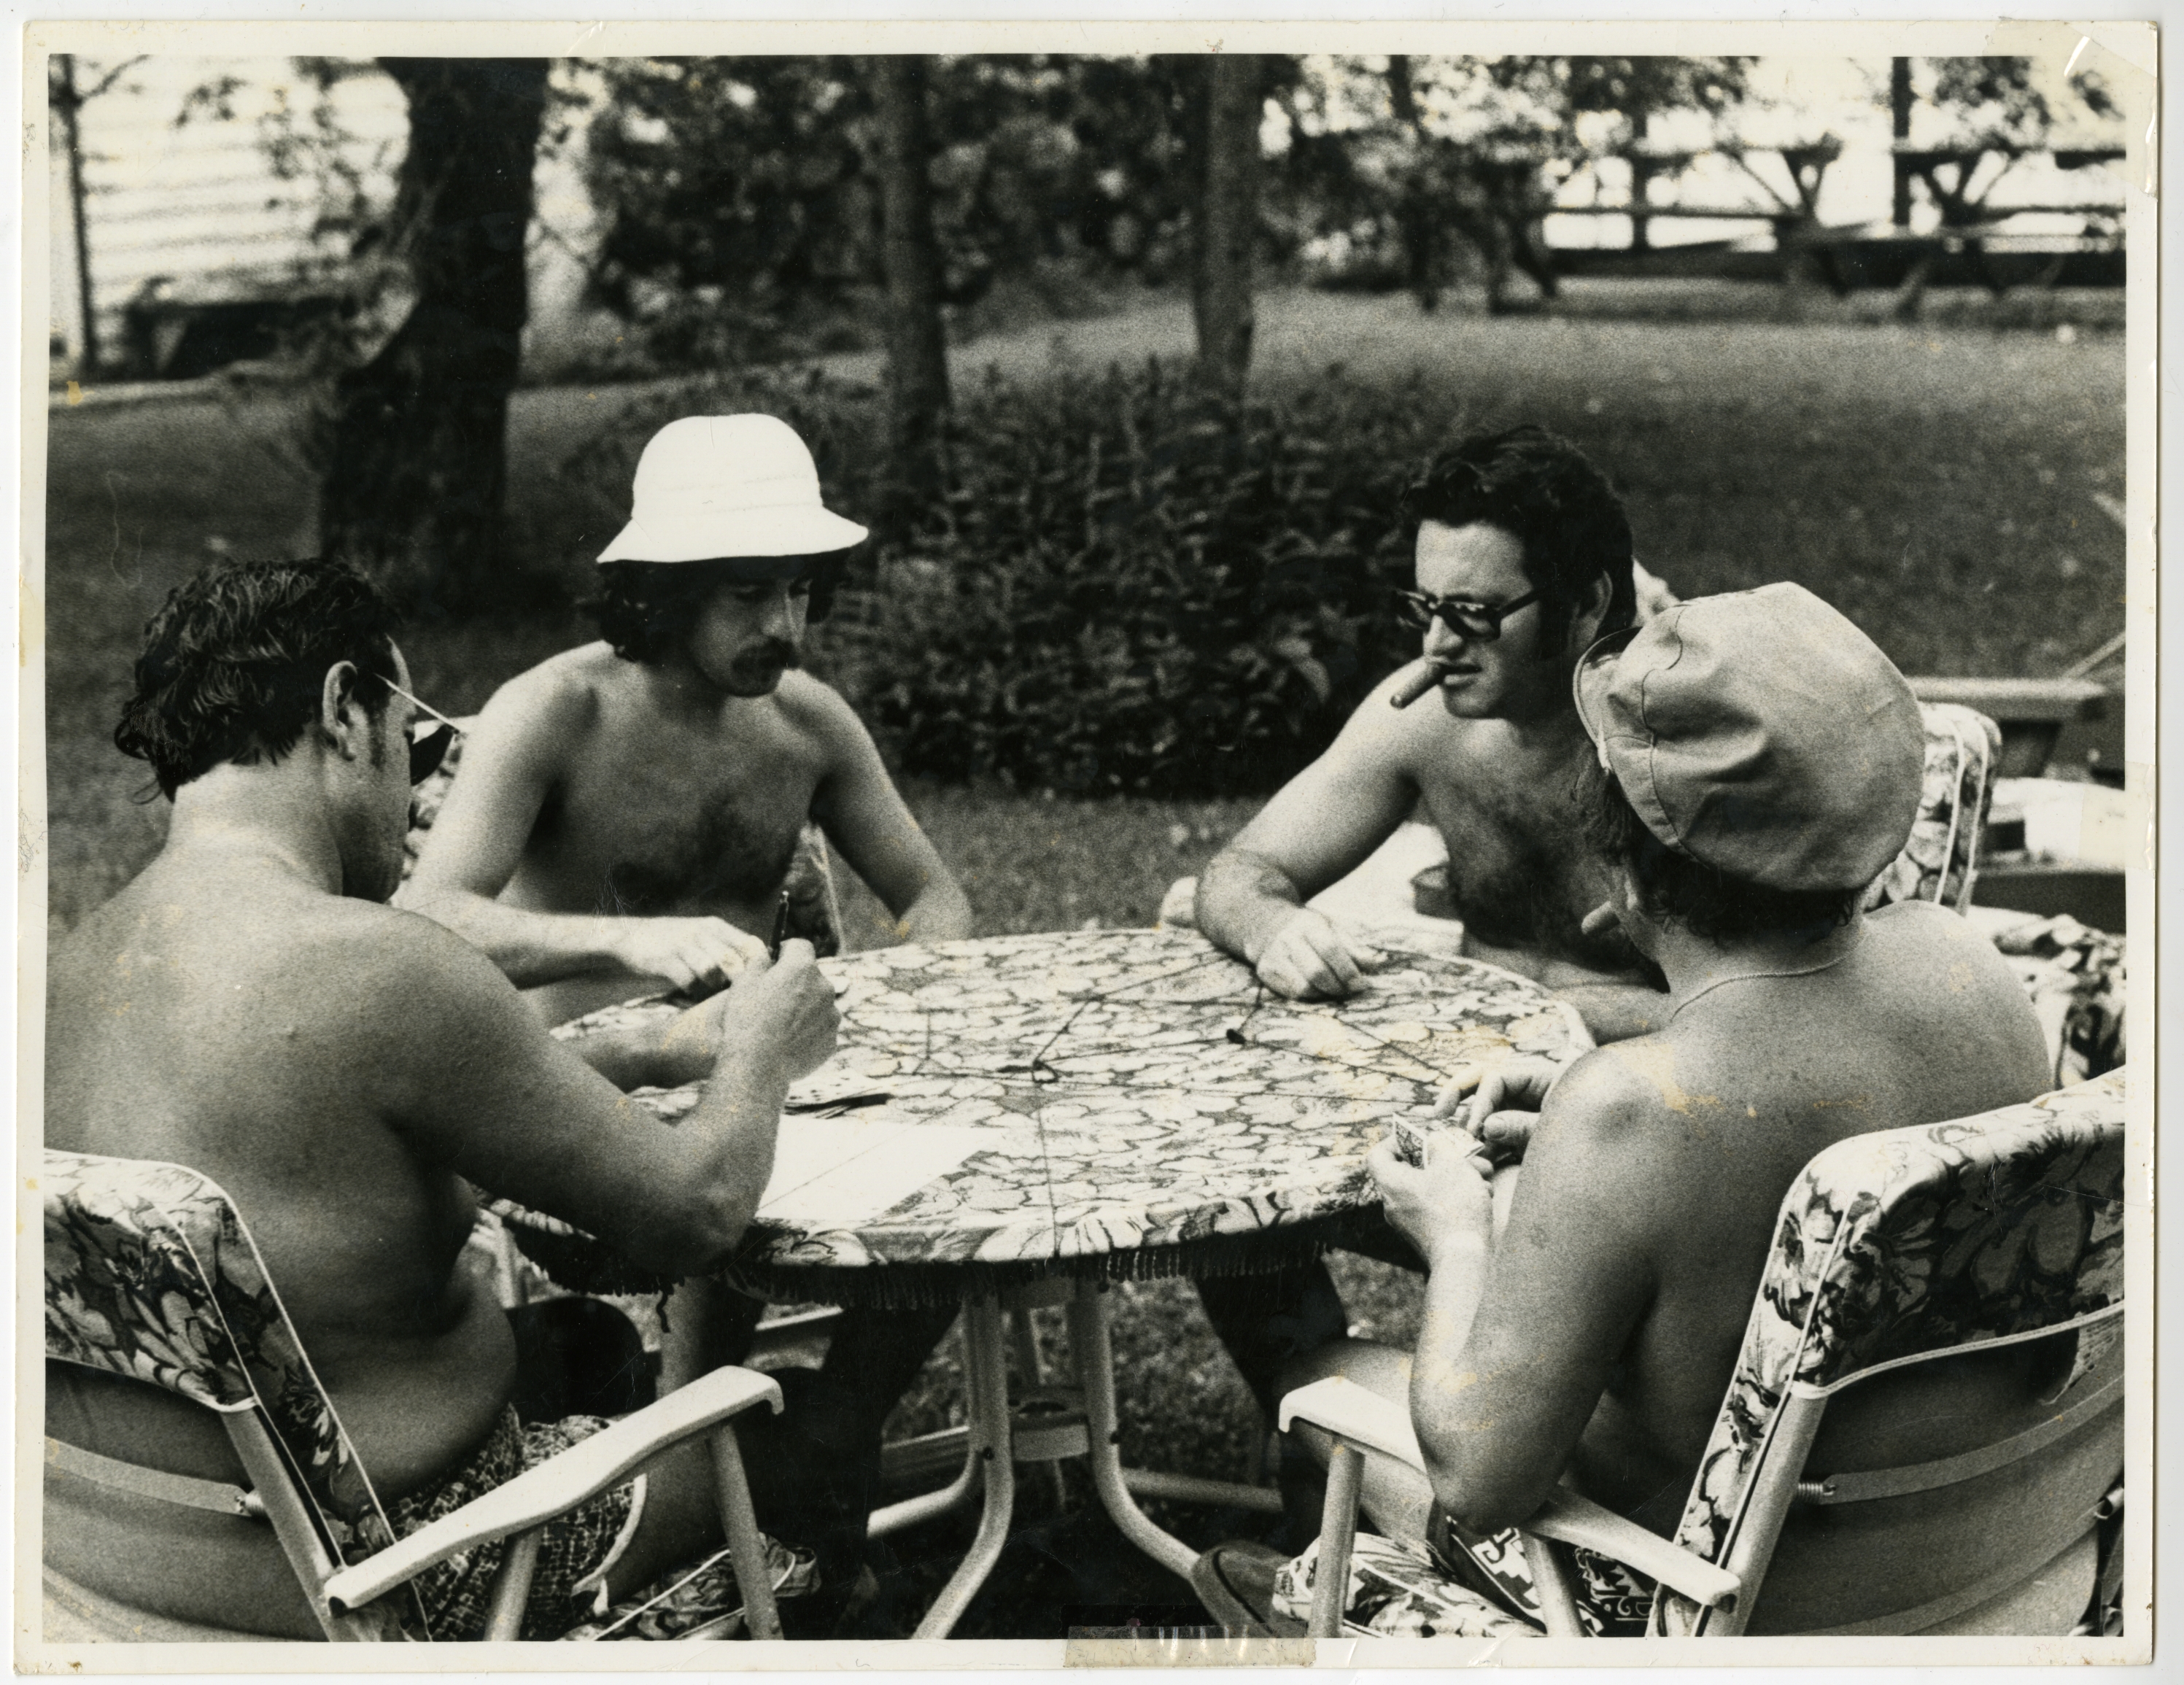 Jack Szeiser, Abe Blankenstein, Harley Mintz, and Al Mintz playing poker